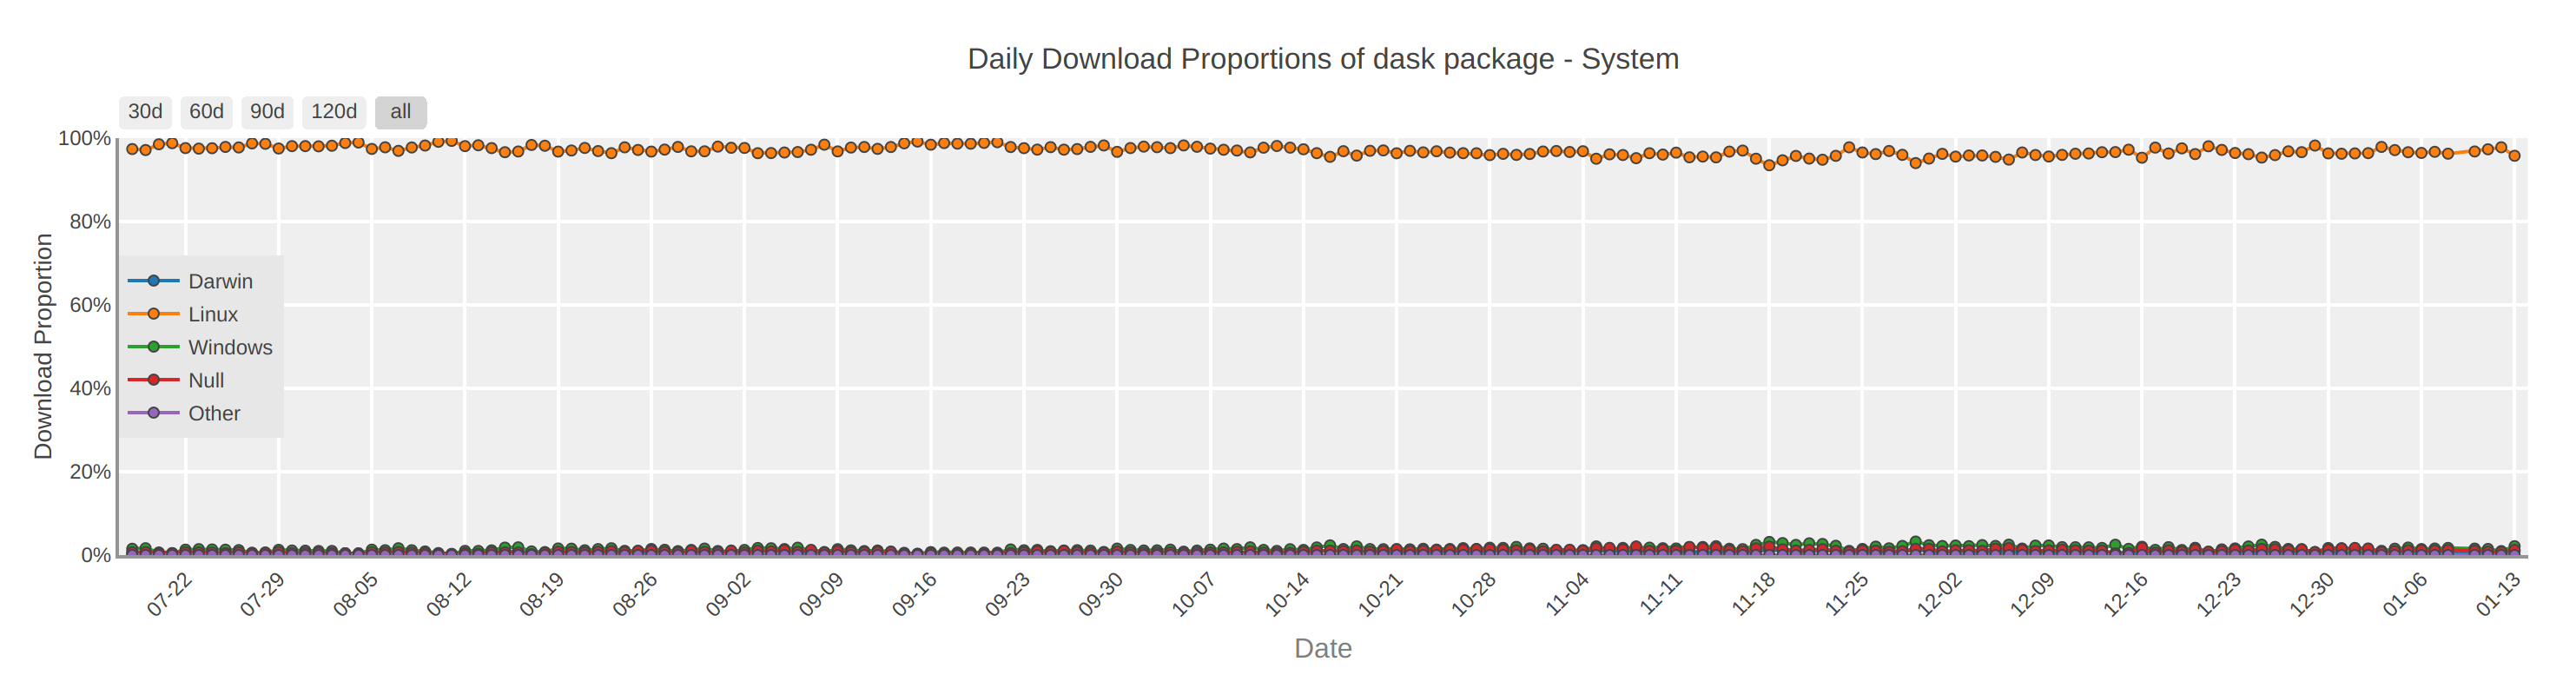 Linux dominates download counts